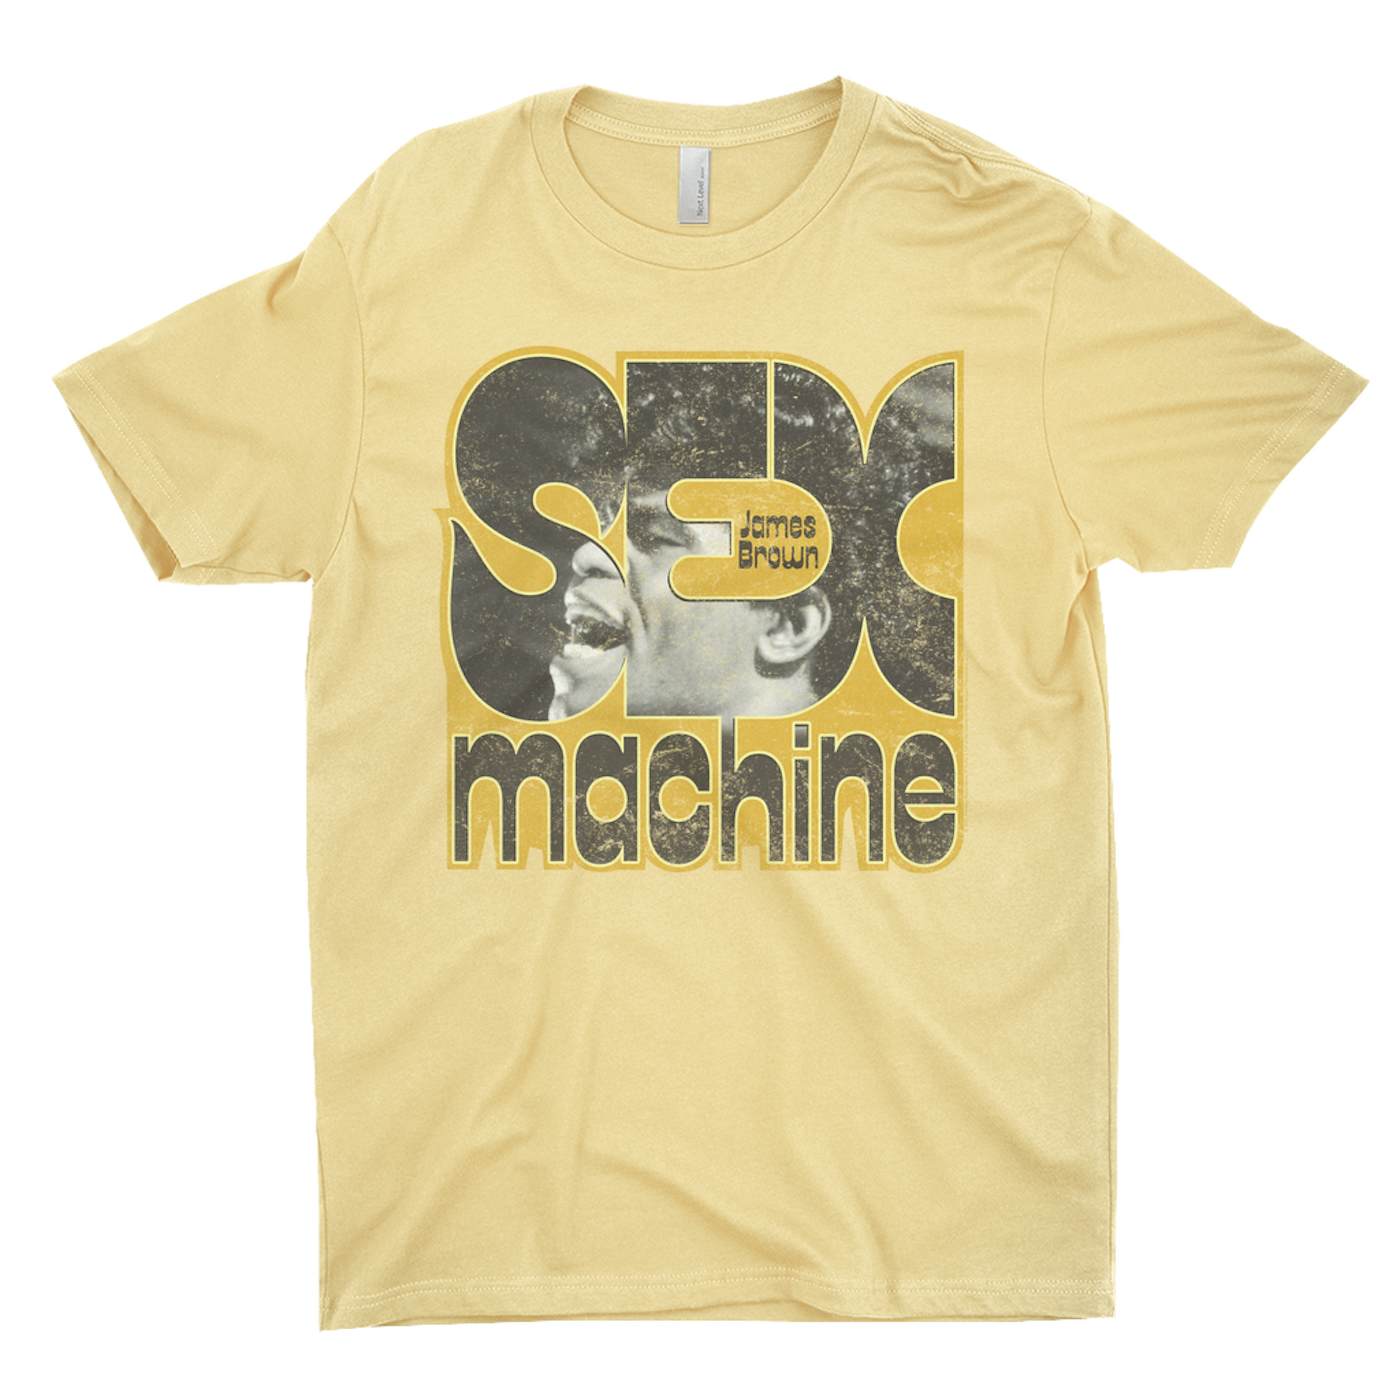 James Brown T-Shirt | Sex Machine In Yellow Design James Brown Shirt